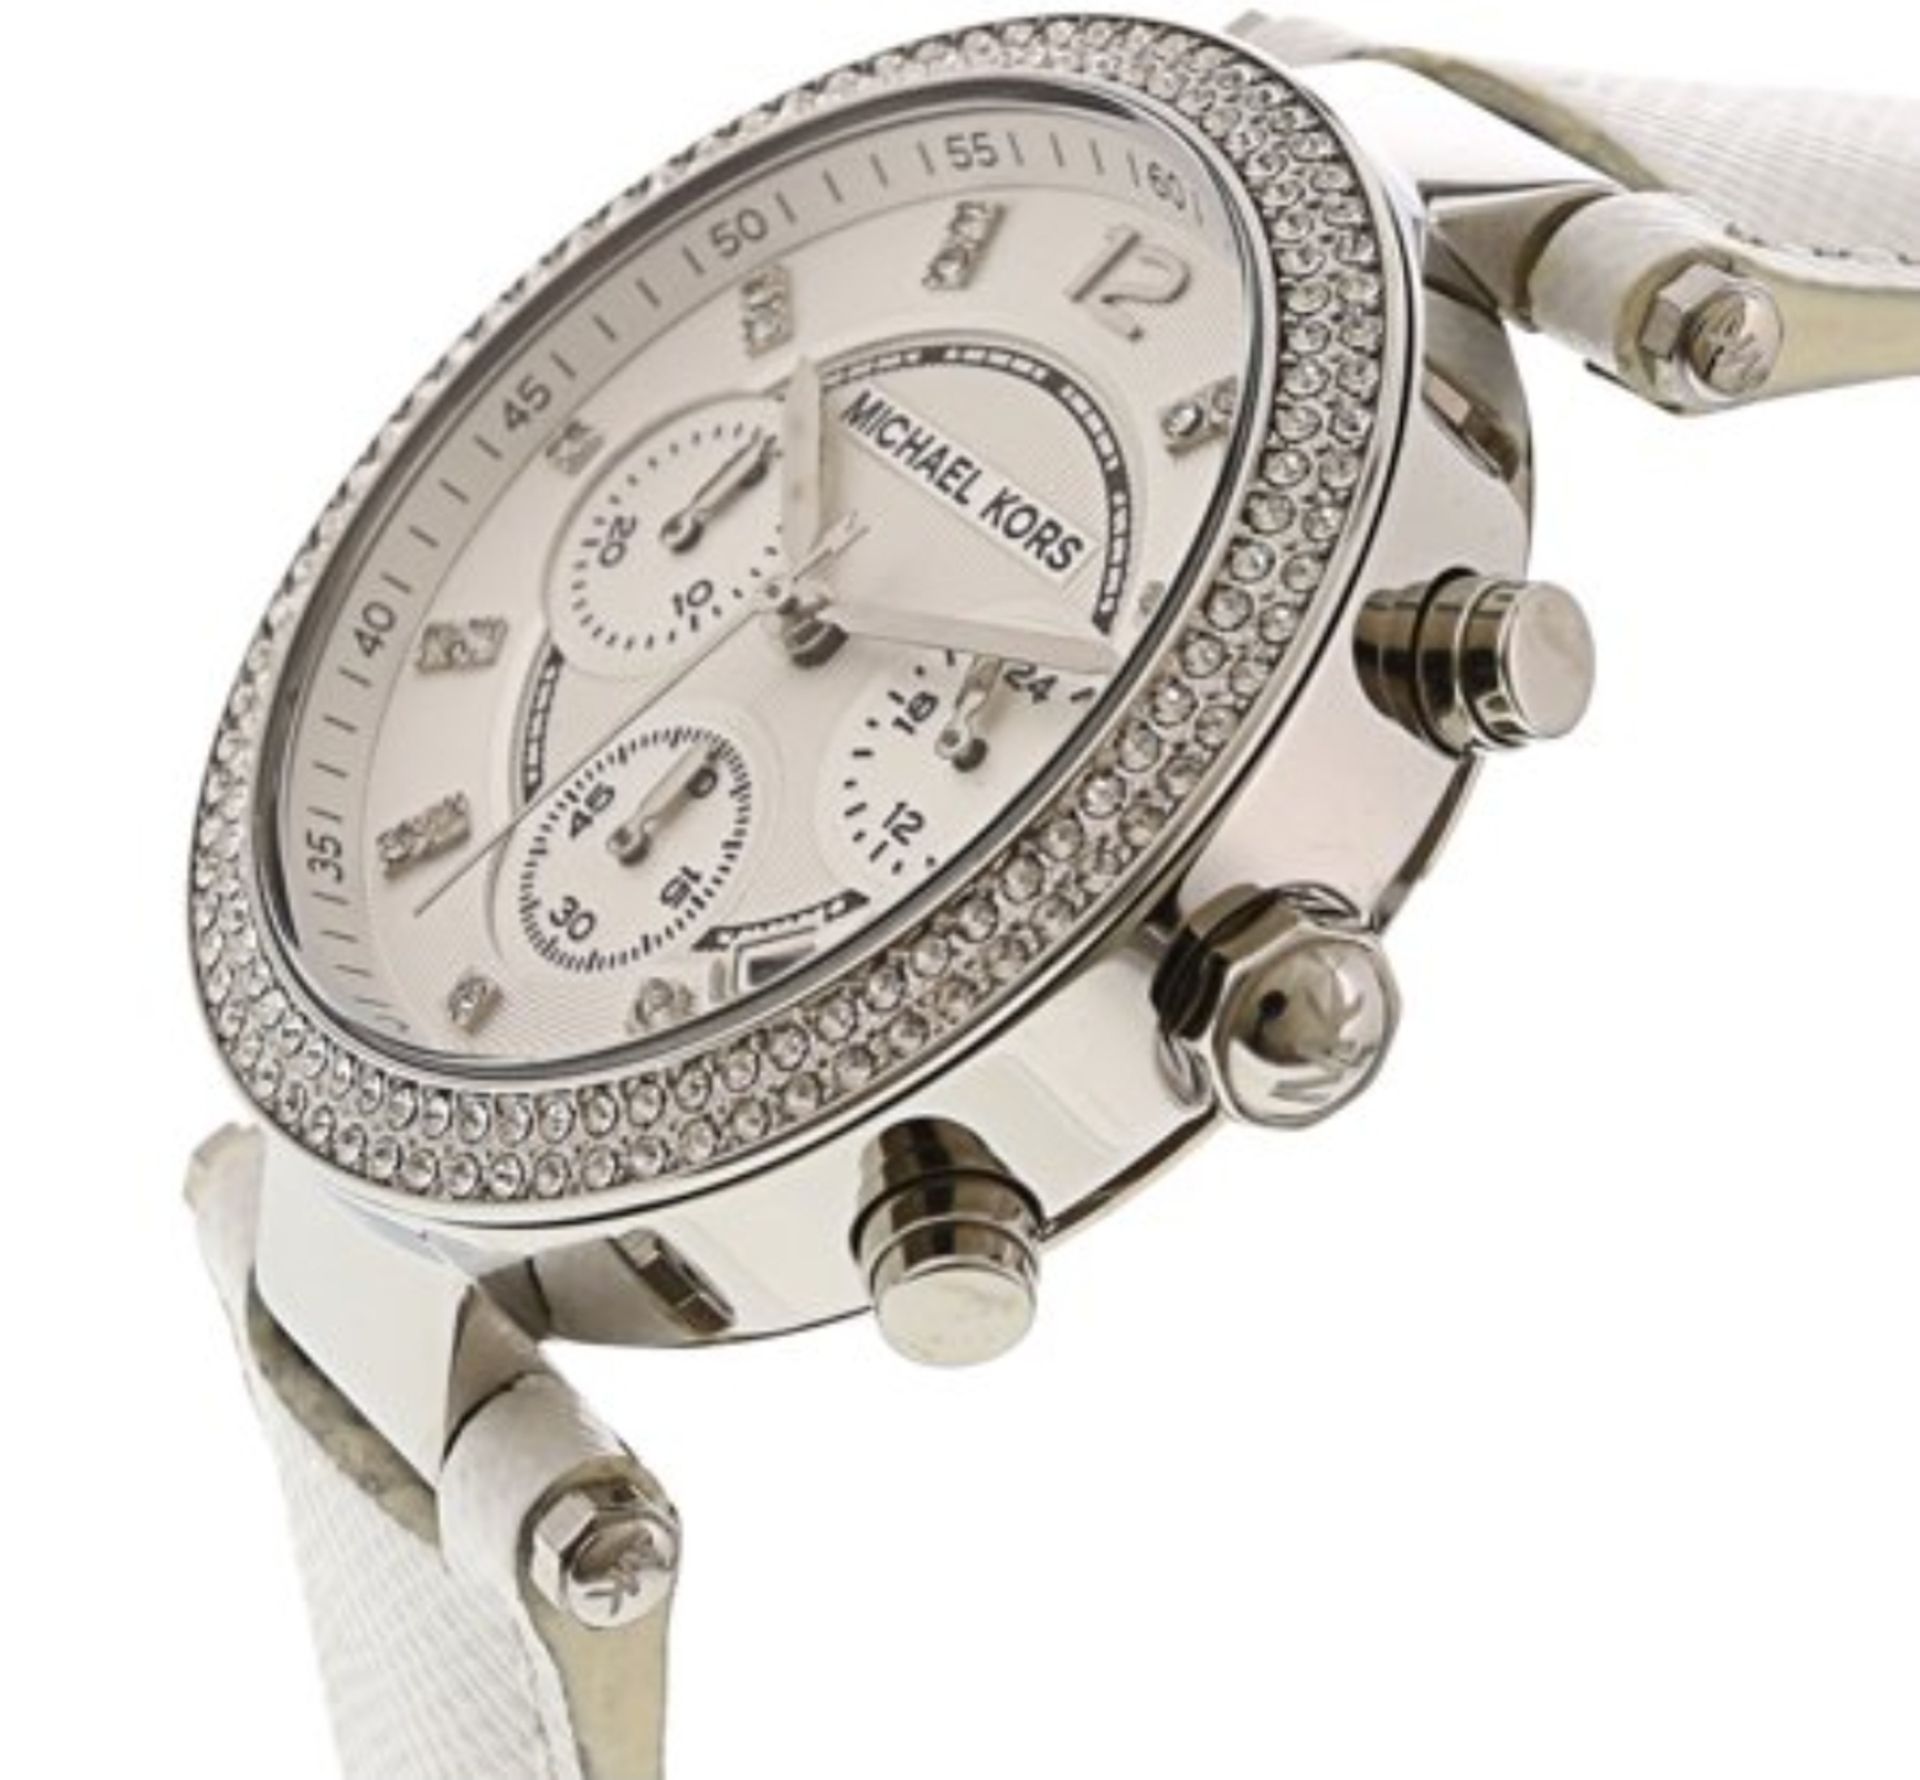 Michael Kors MK2277 Ladies Parker White Leather Strap quartz Chronograph Designer Watch - Image 5 of 8